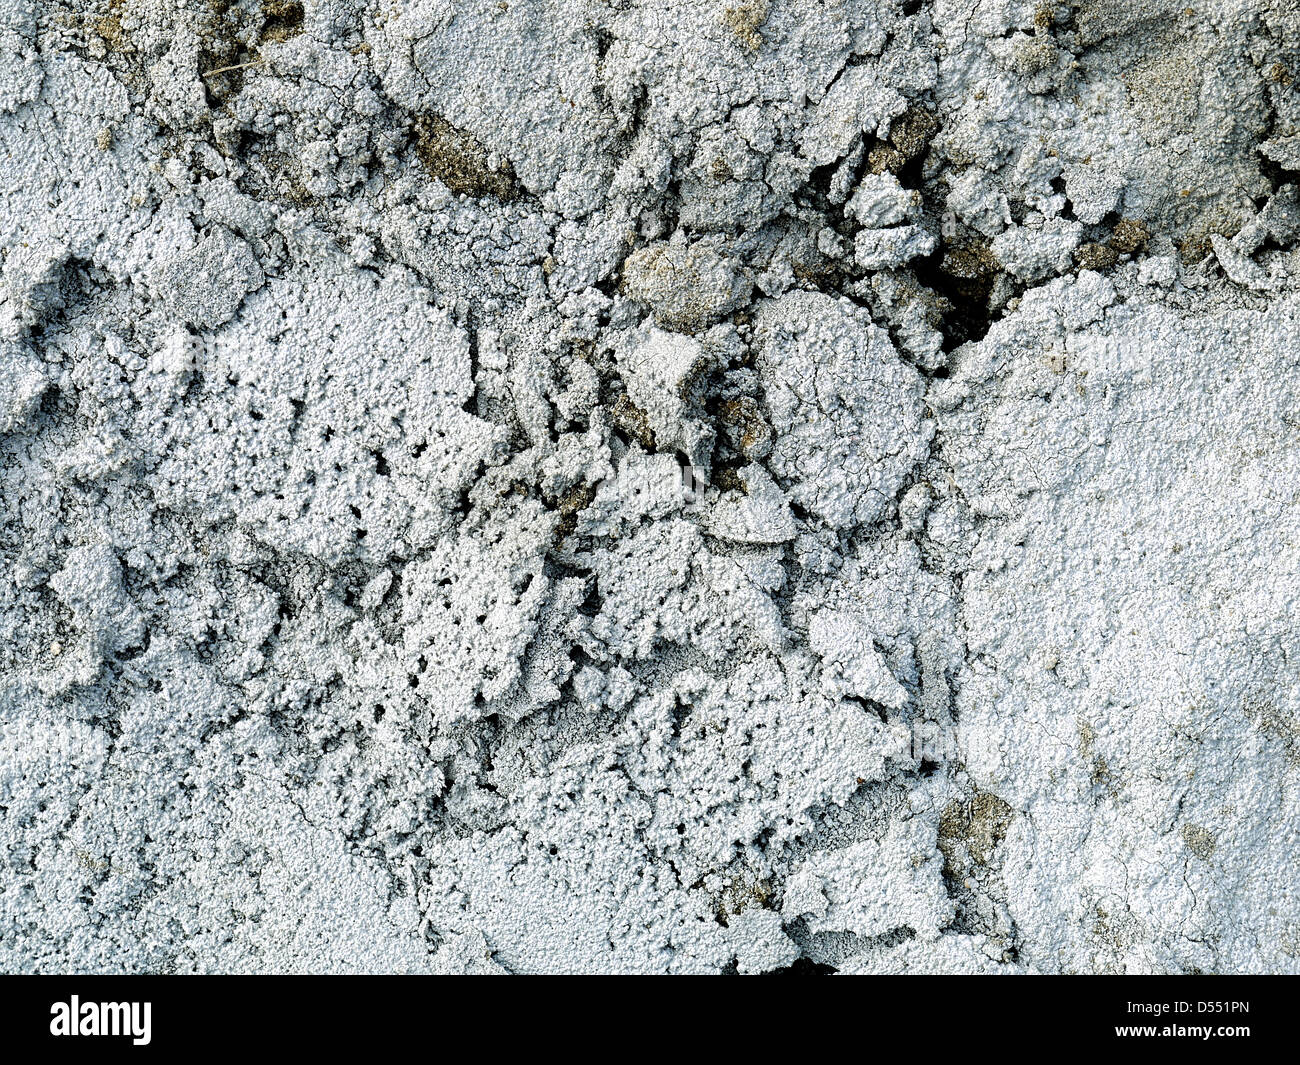 Background of grunge cracked concrete surface Stock Photo